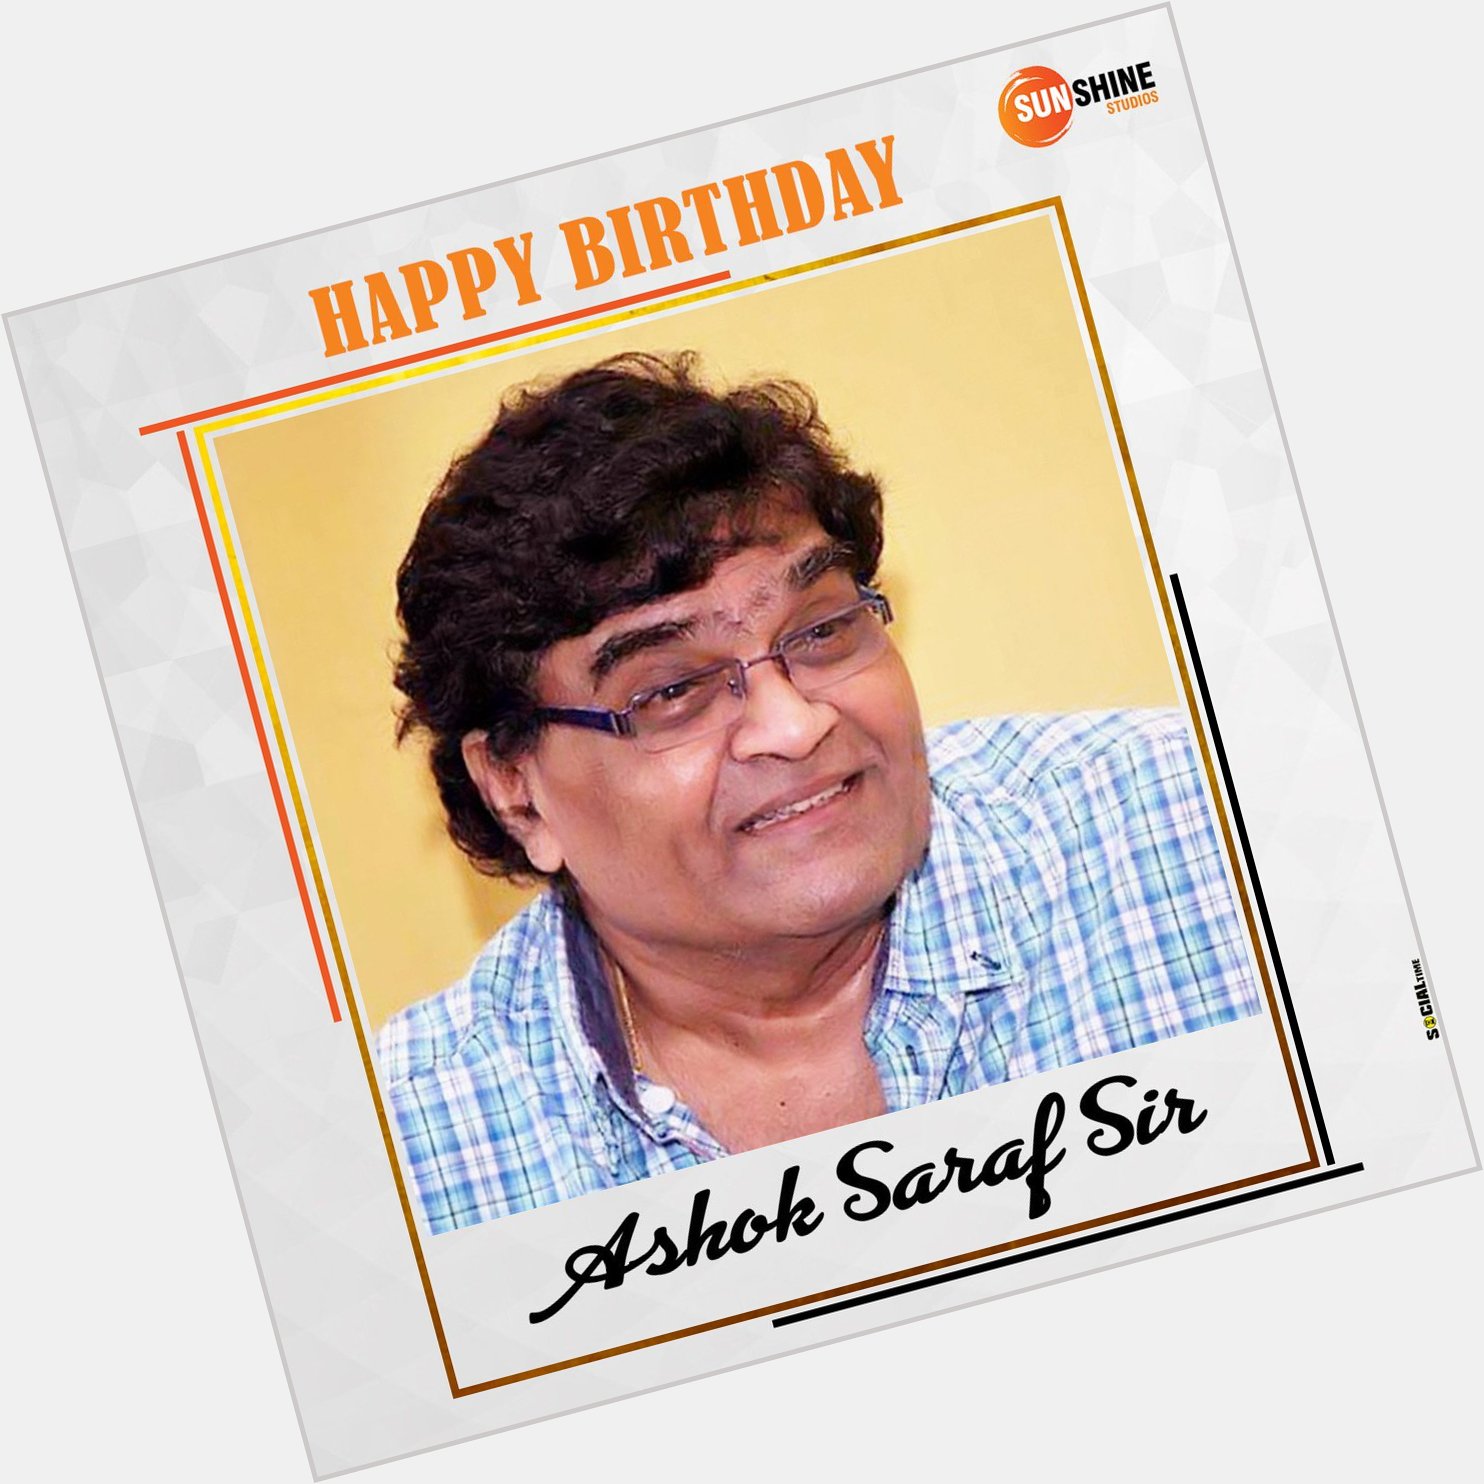 Wishing a very Happy Birthday to the Superstar of Marathi Film Industry Ashok Saraf ji! 